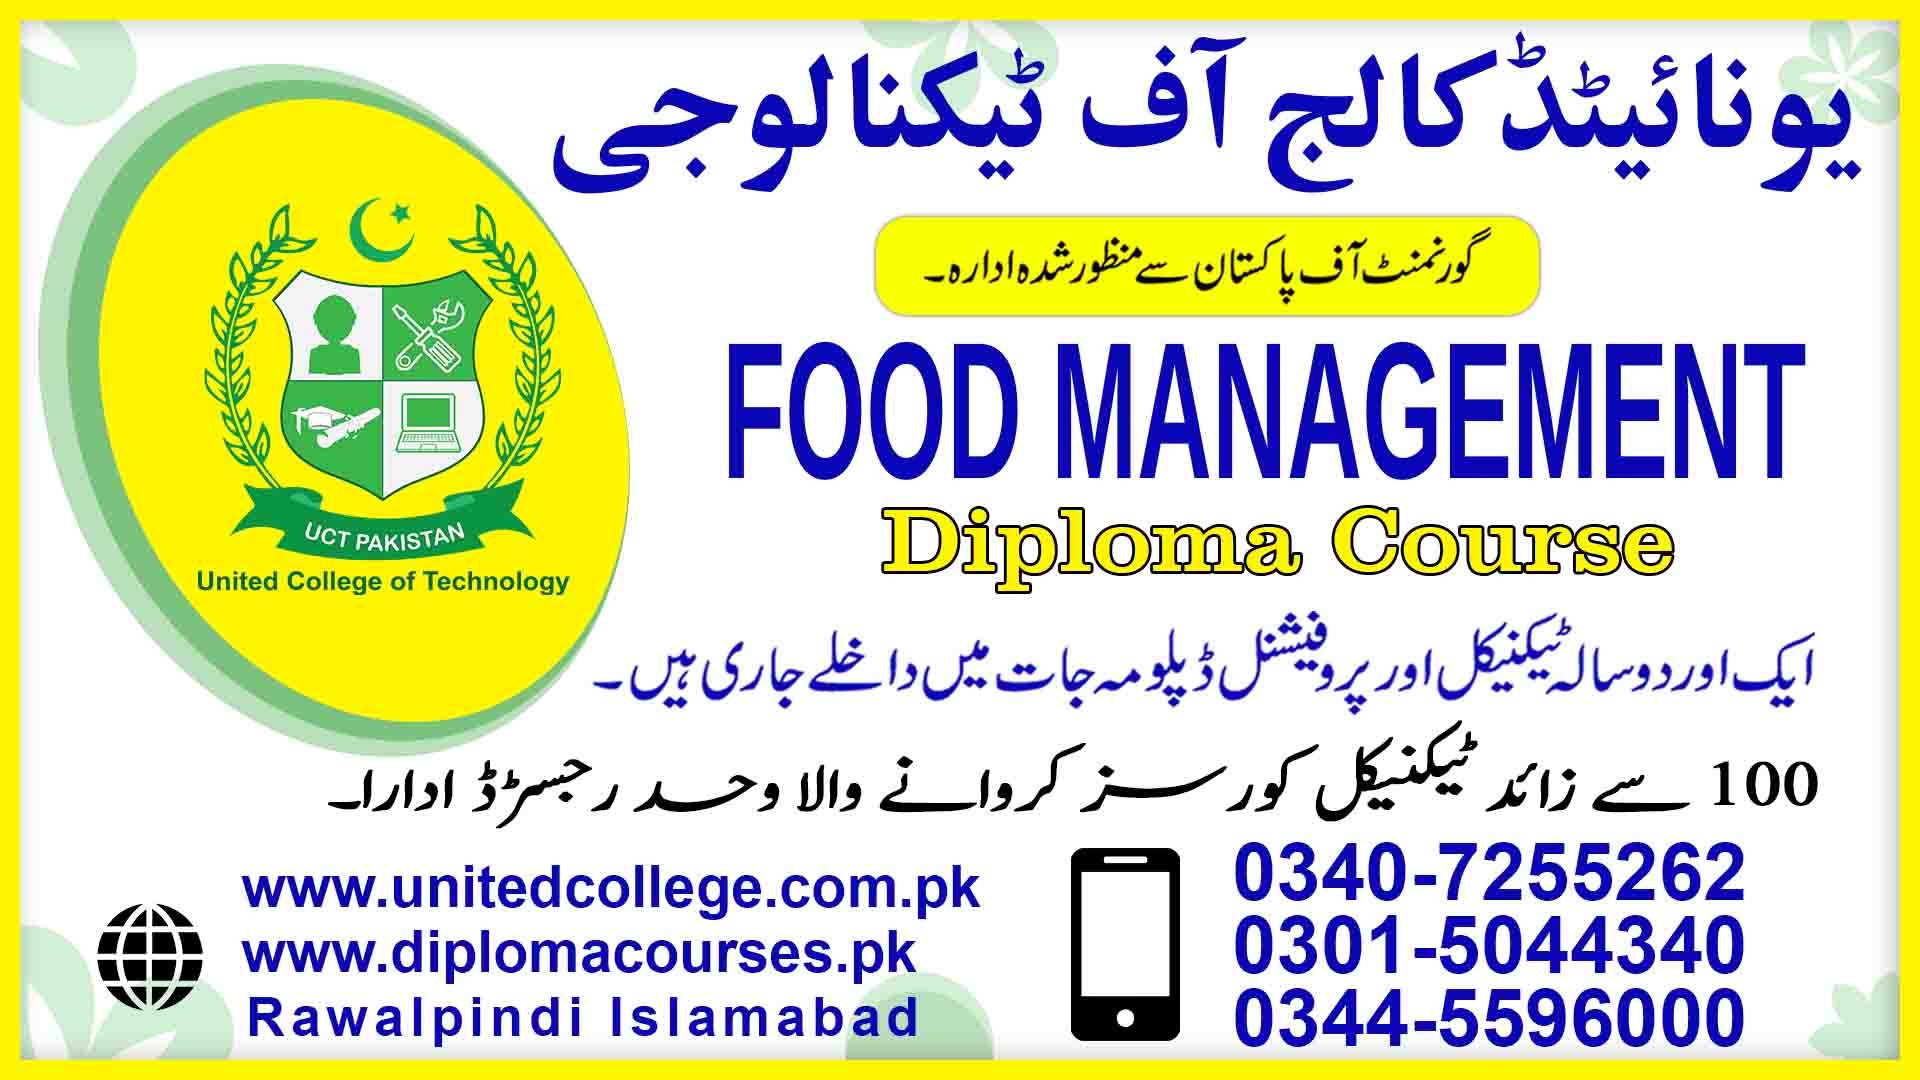 FOOD MANAGEMENT COURSE IN RAWALPINDI ISLAMABAD PAKISTAN